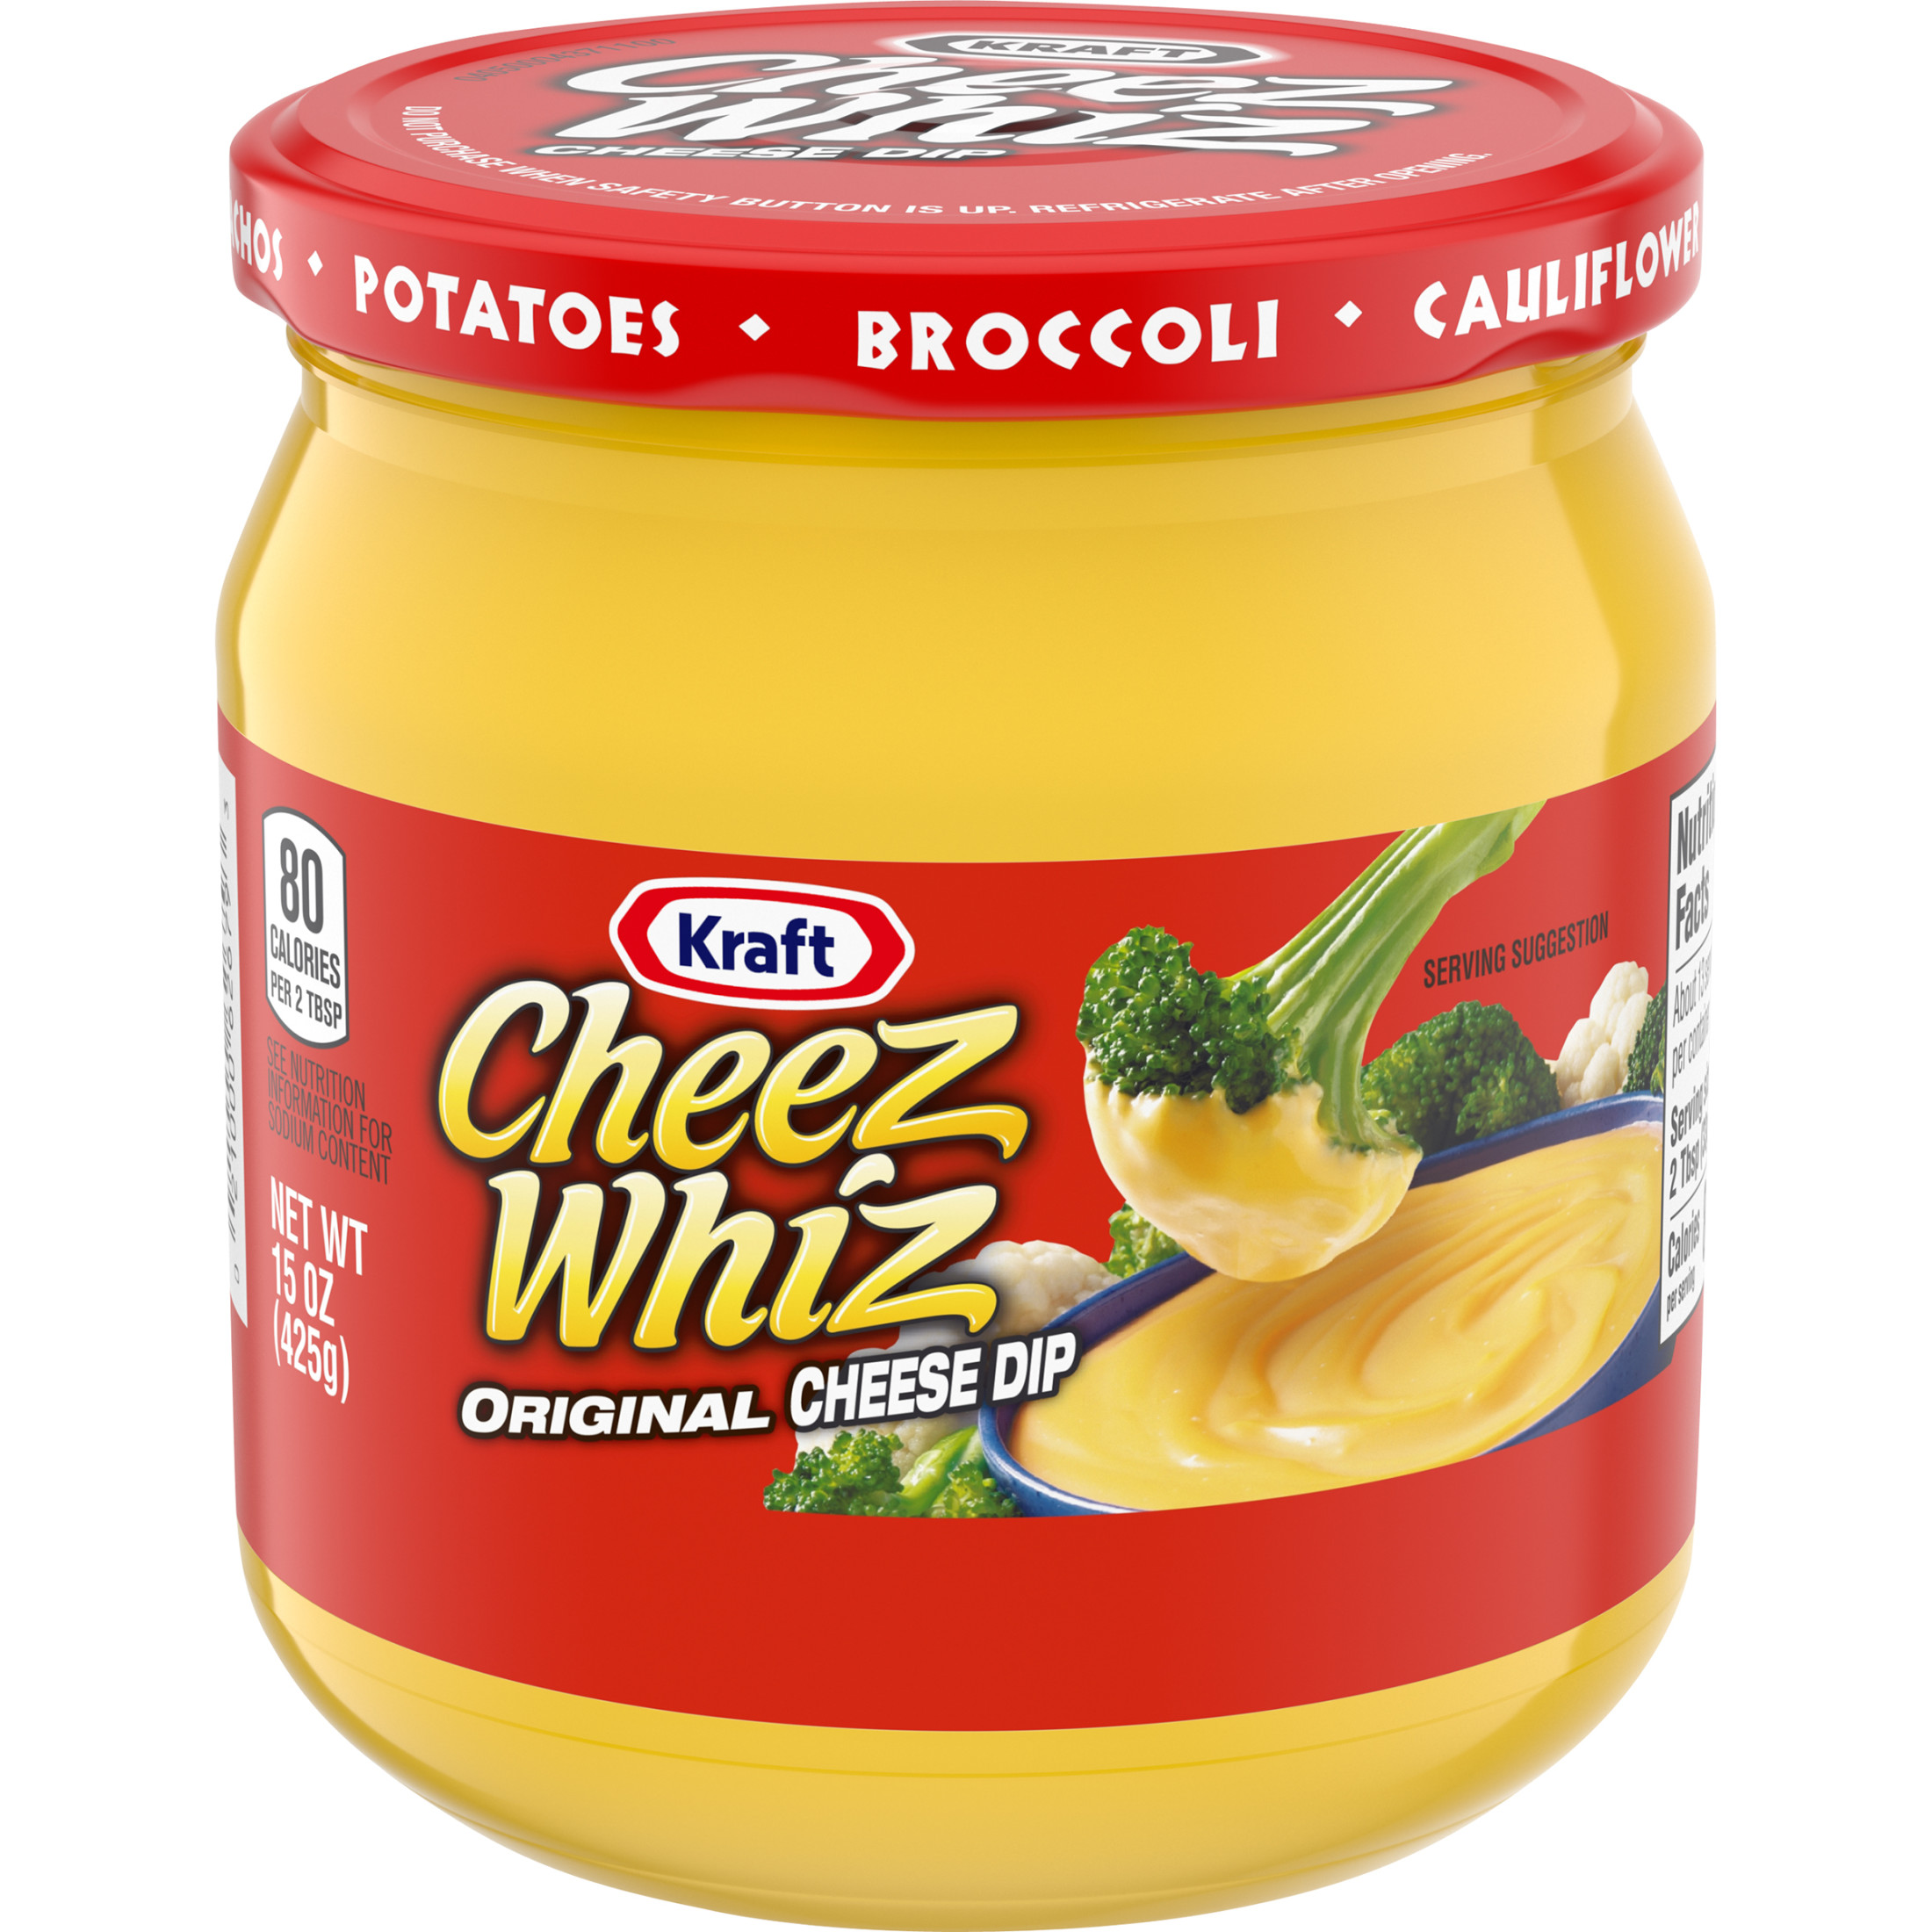 Cheez Whiz Original Cheese Dip, 15 oz Jar - image 4 of 6